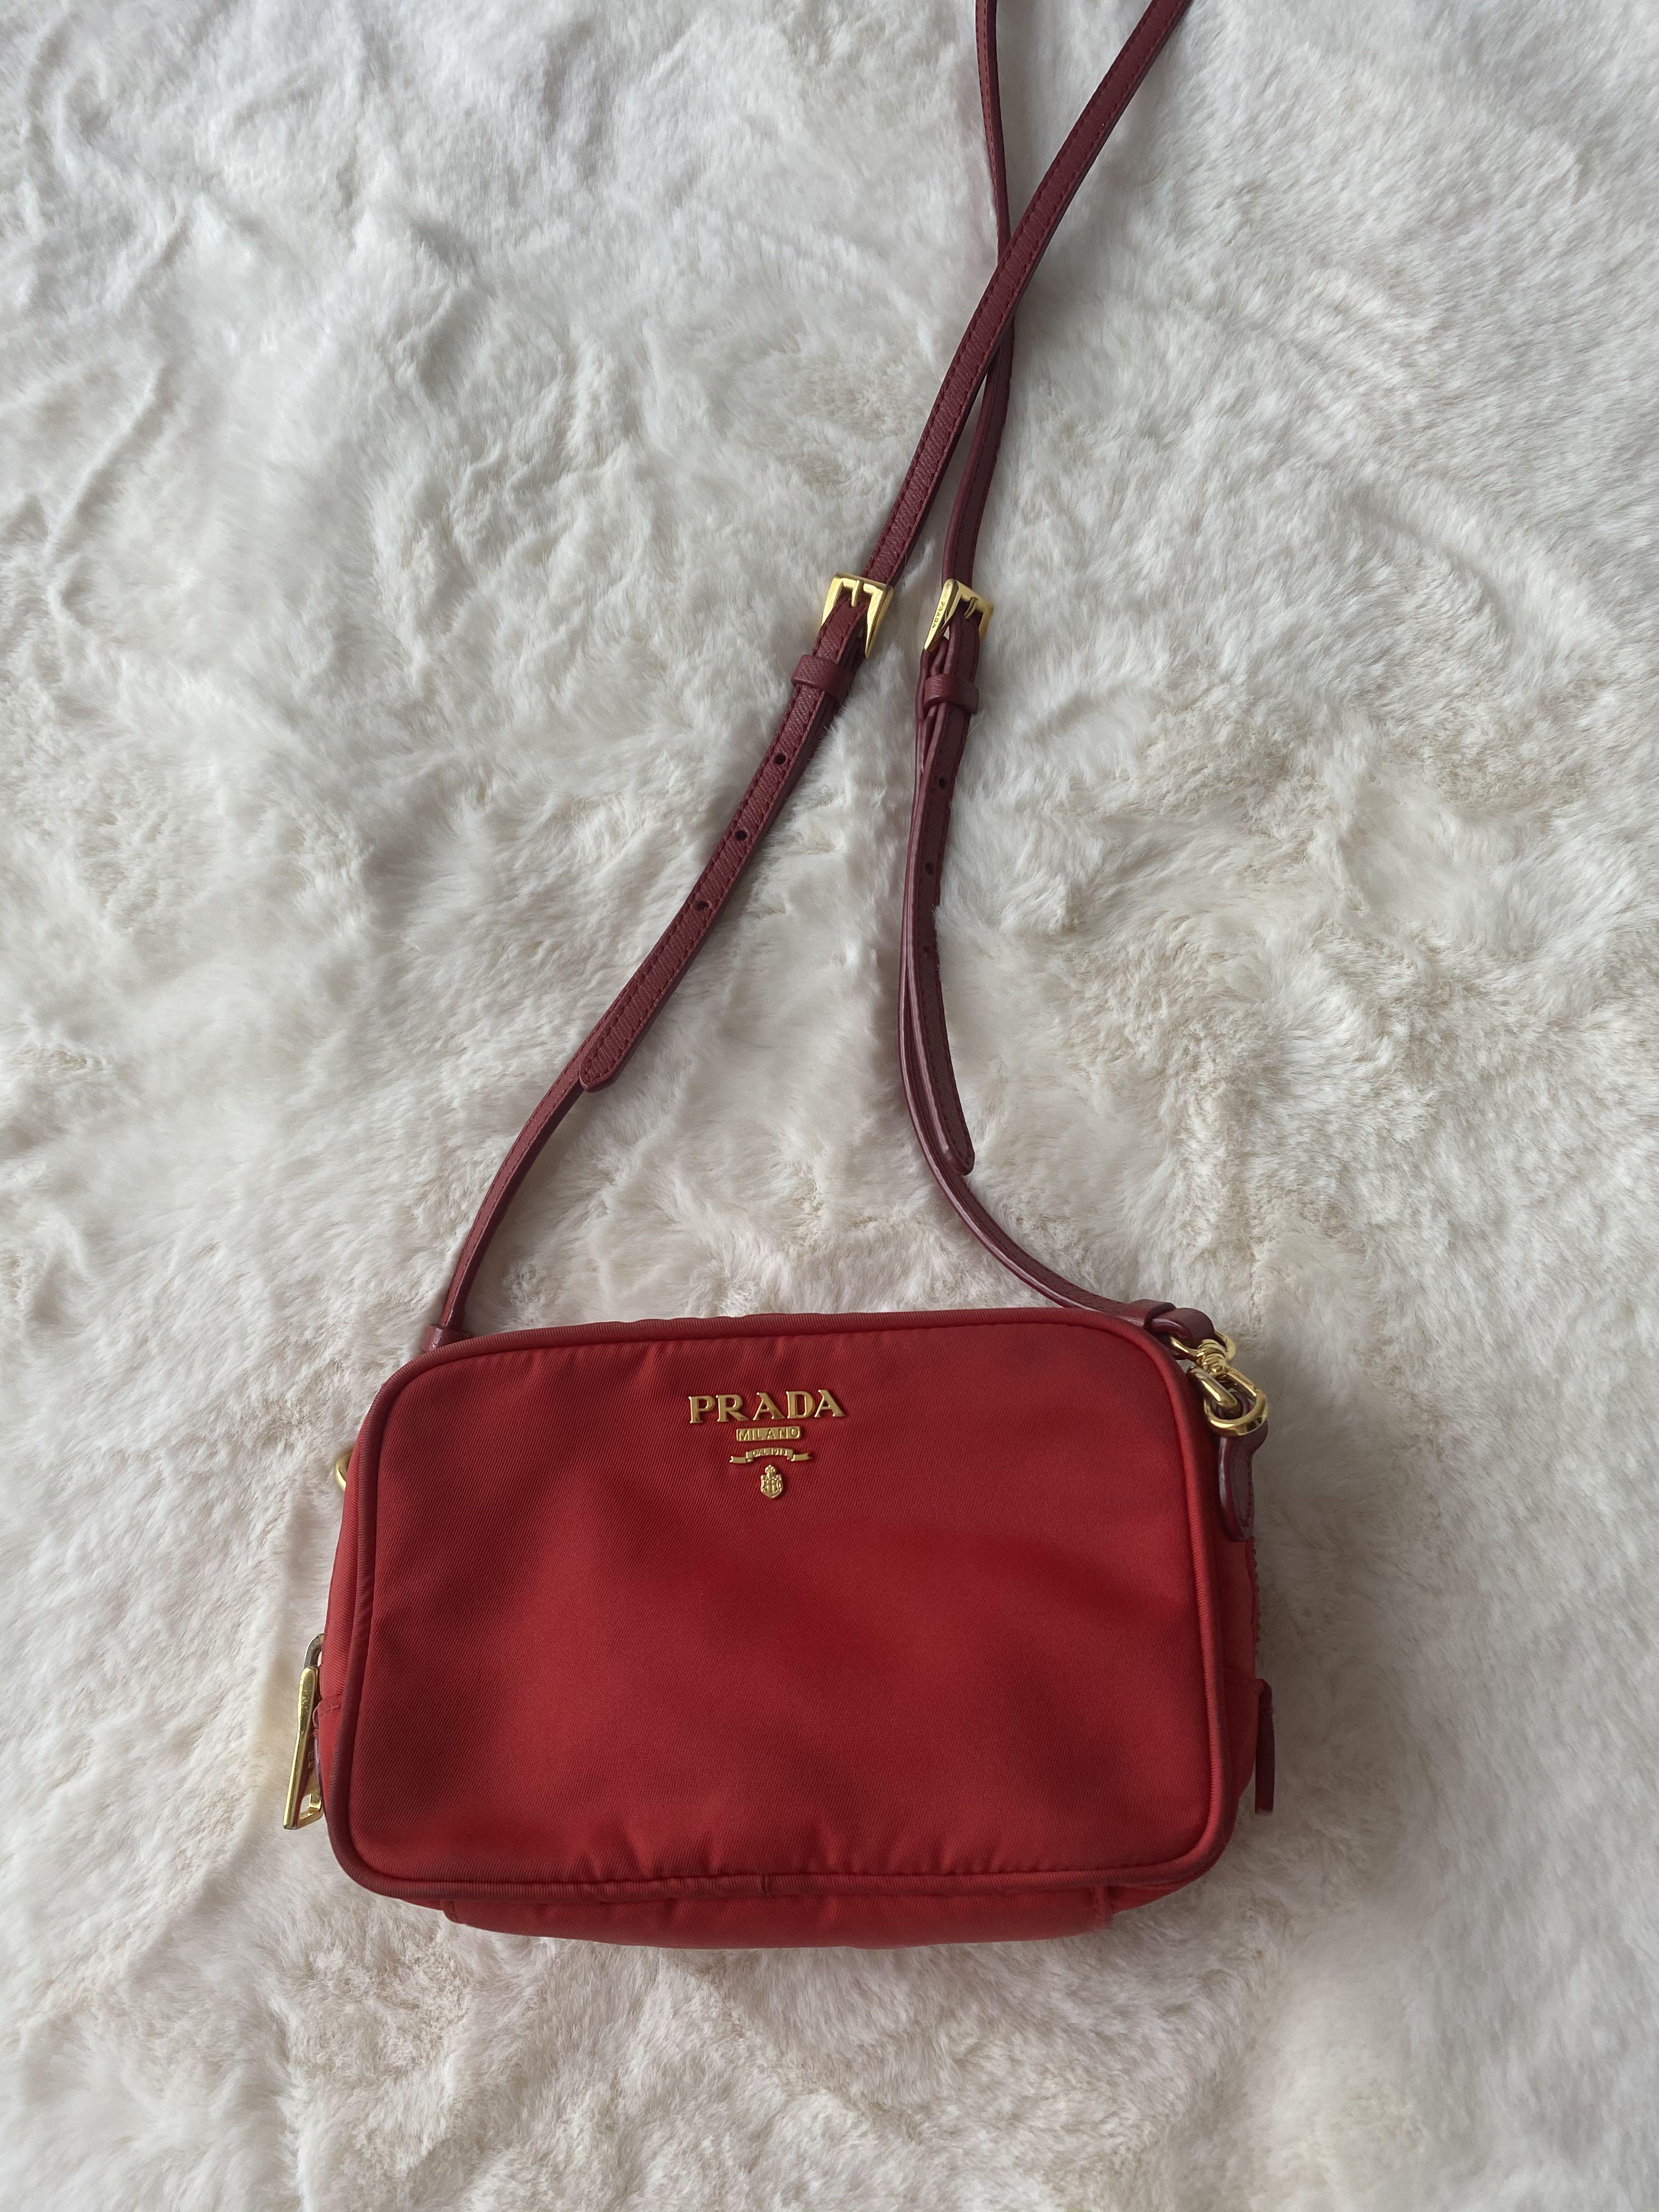 prada sling bag red